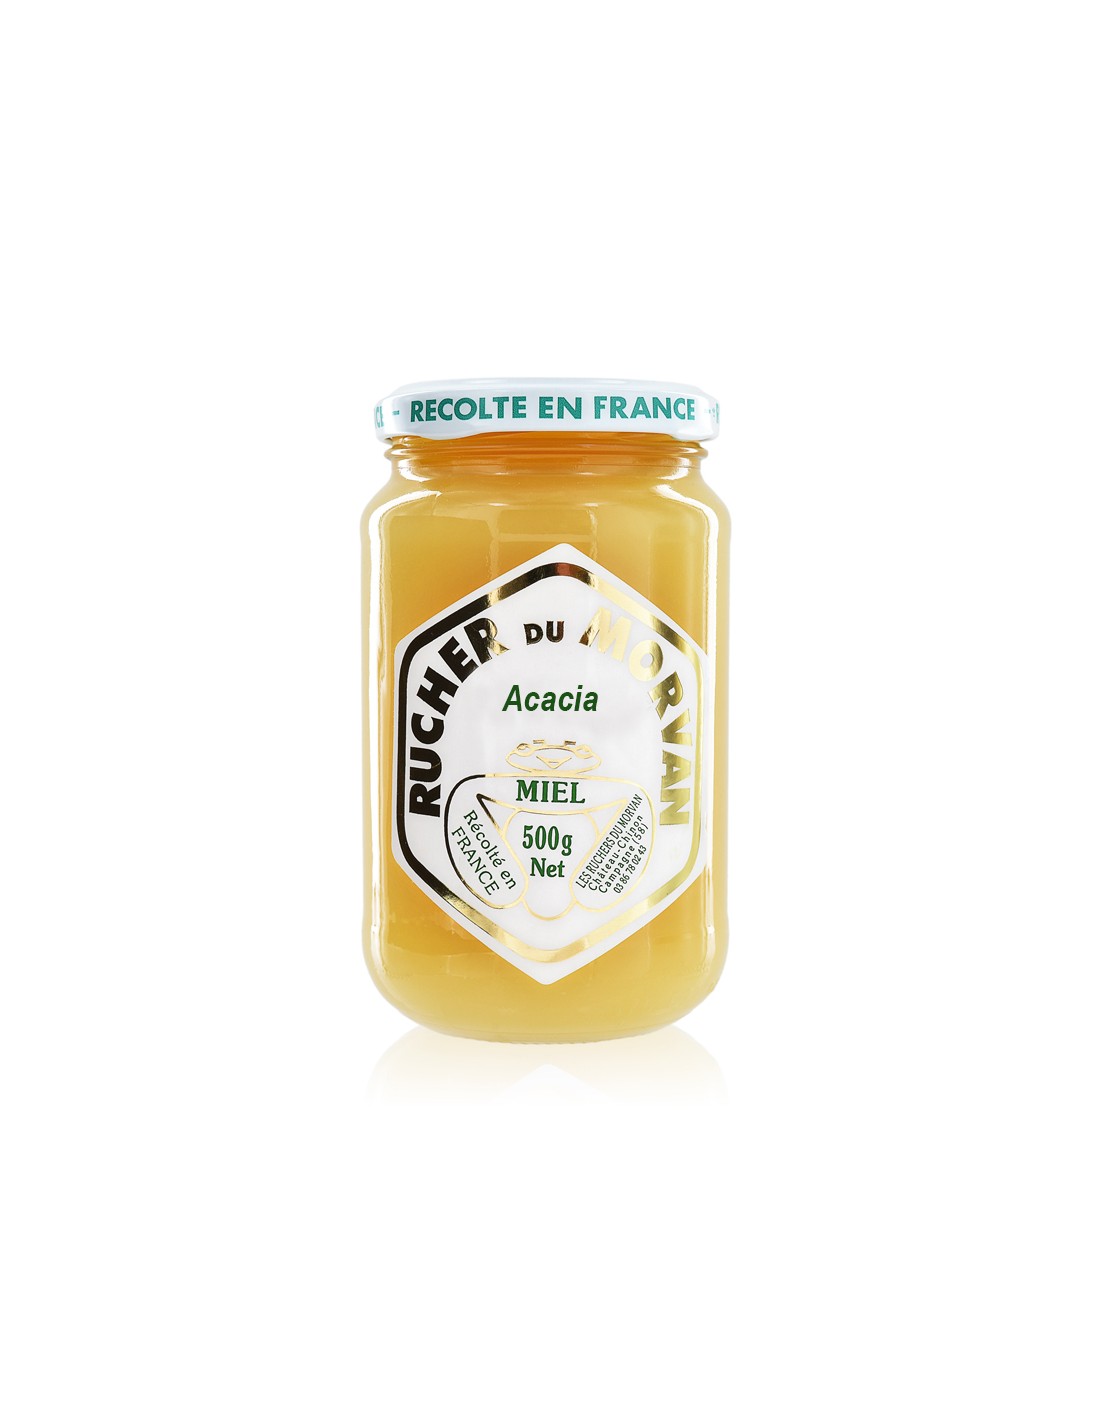 Miel acacia produit en Bourgogne-Franche-Comte